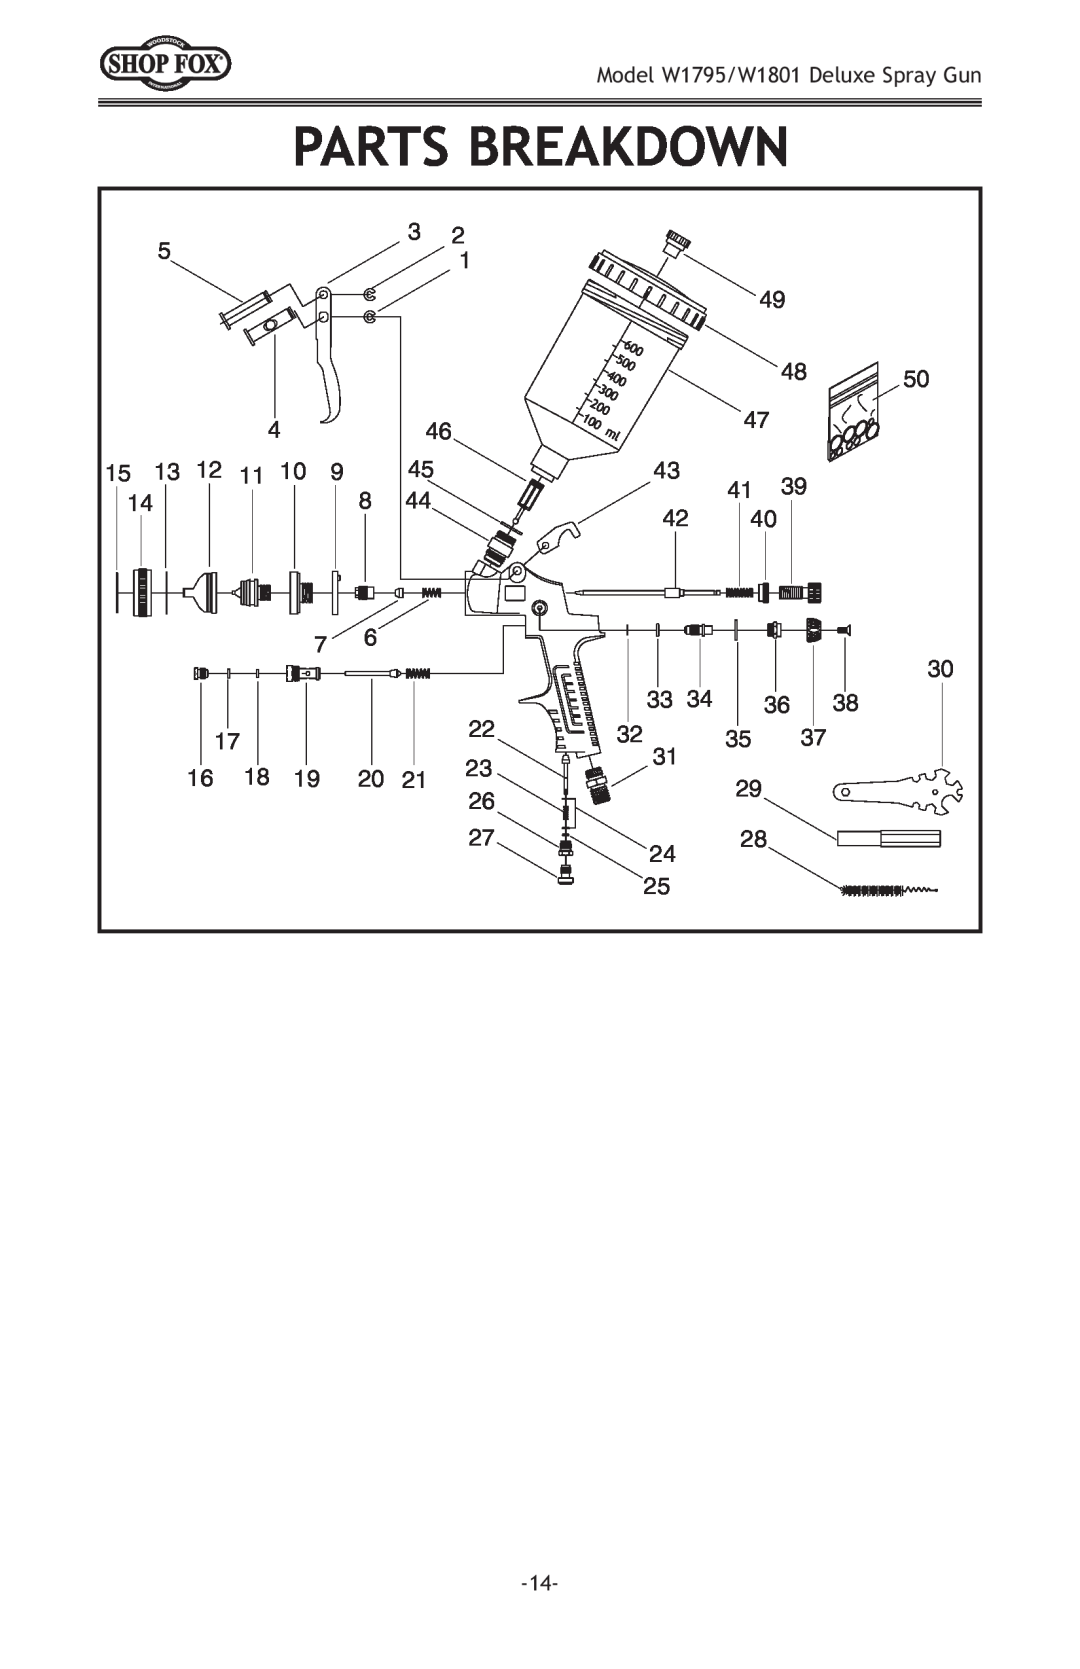 Woodstock owner manual Parts Breakdown, Model W1795/W1801 Deluxe Spray Gun 